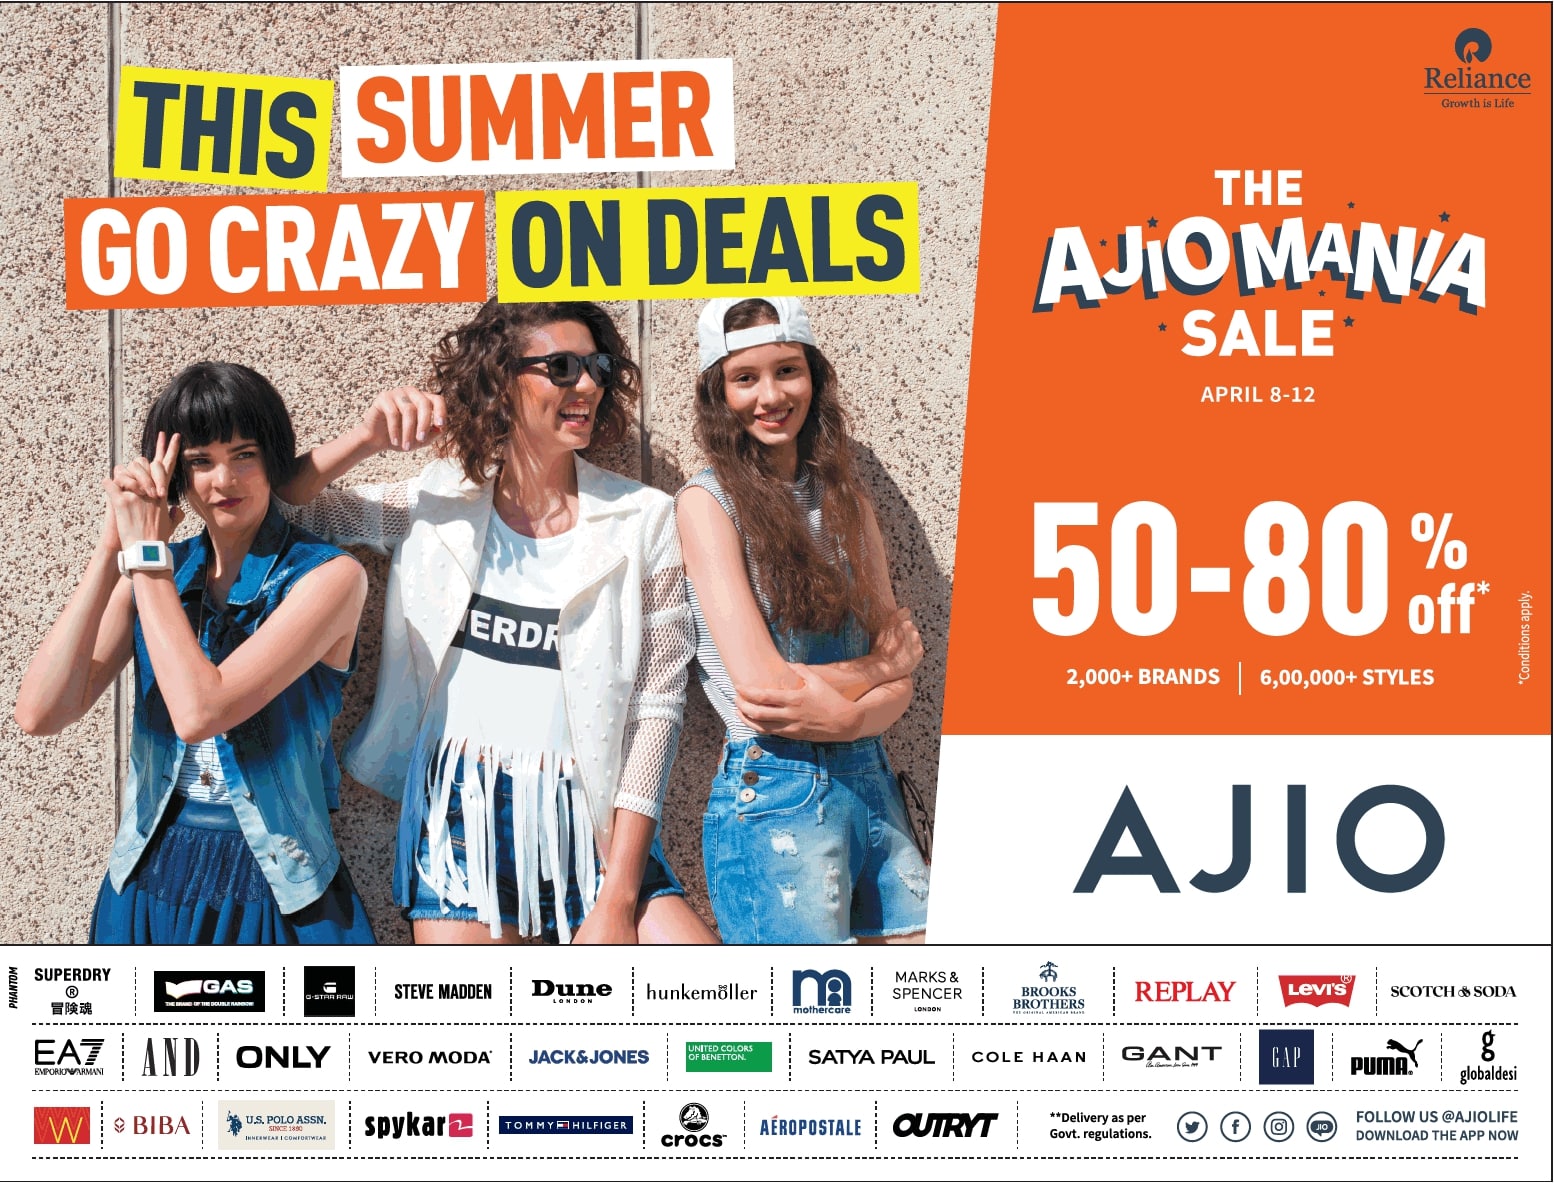 reliance-this-summer-go-crazy-on-deals-the-ajiomania-sale-ad-delhi-times-10-04-2021